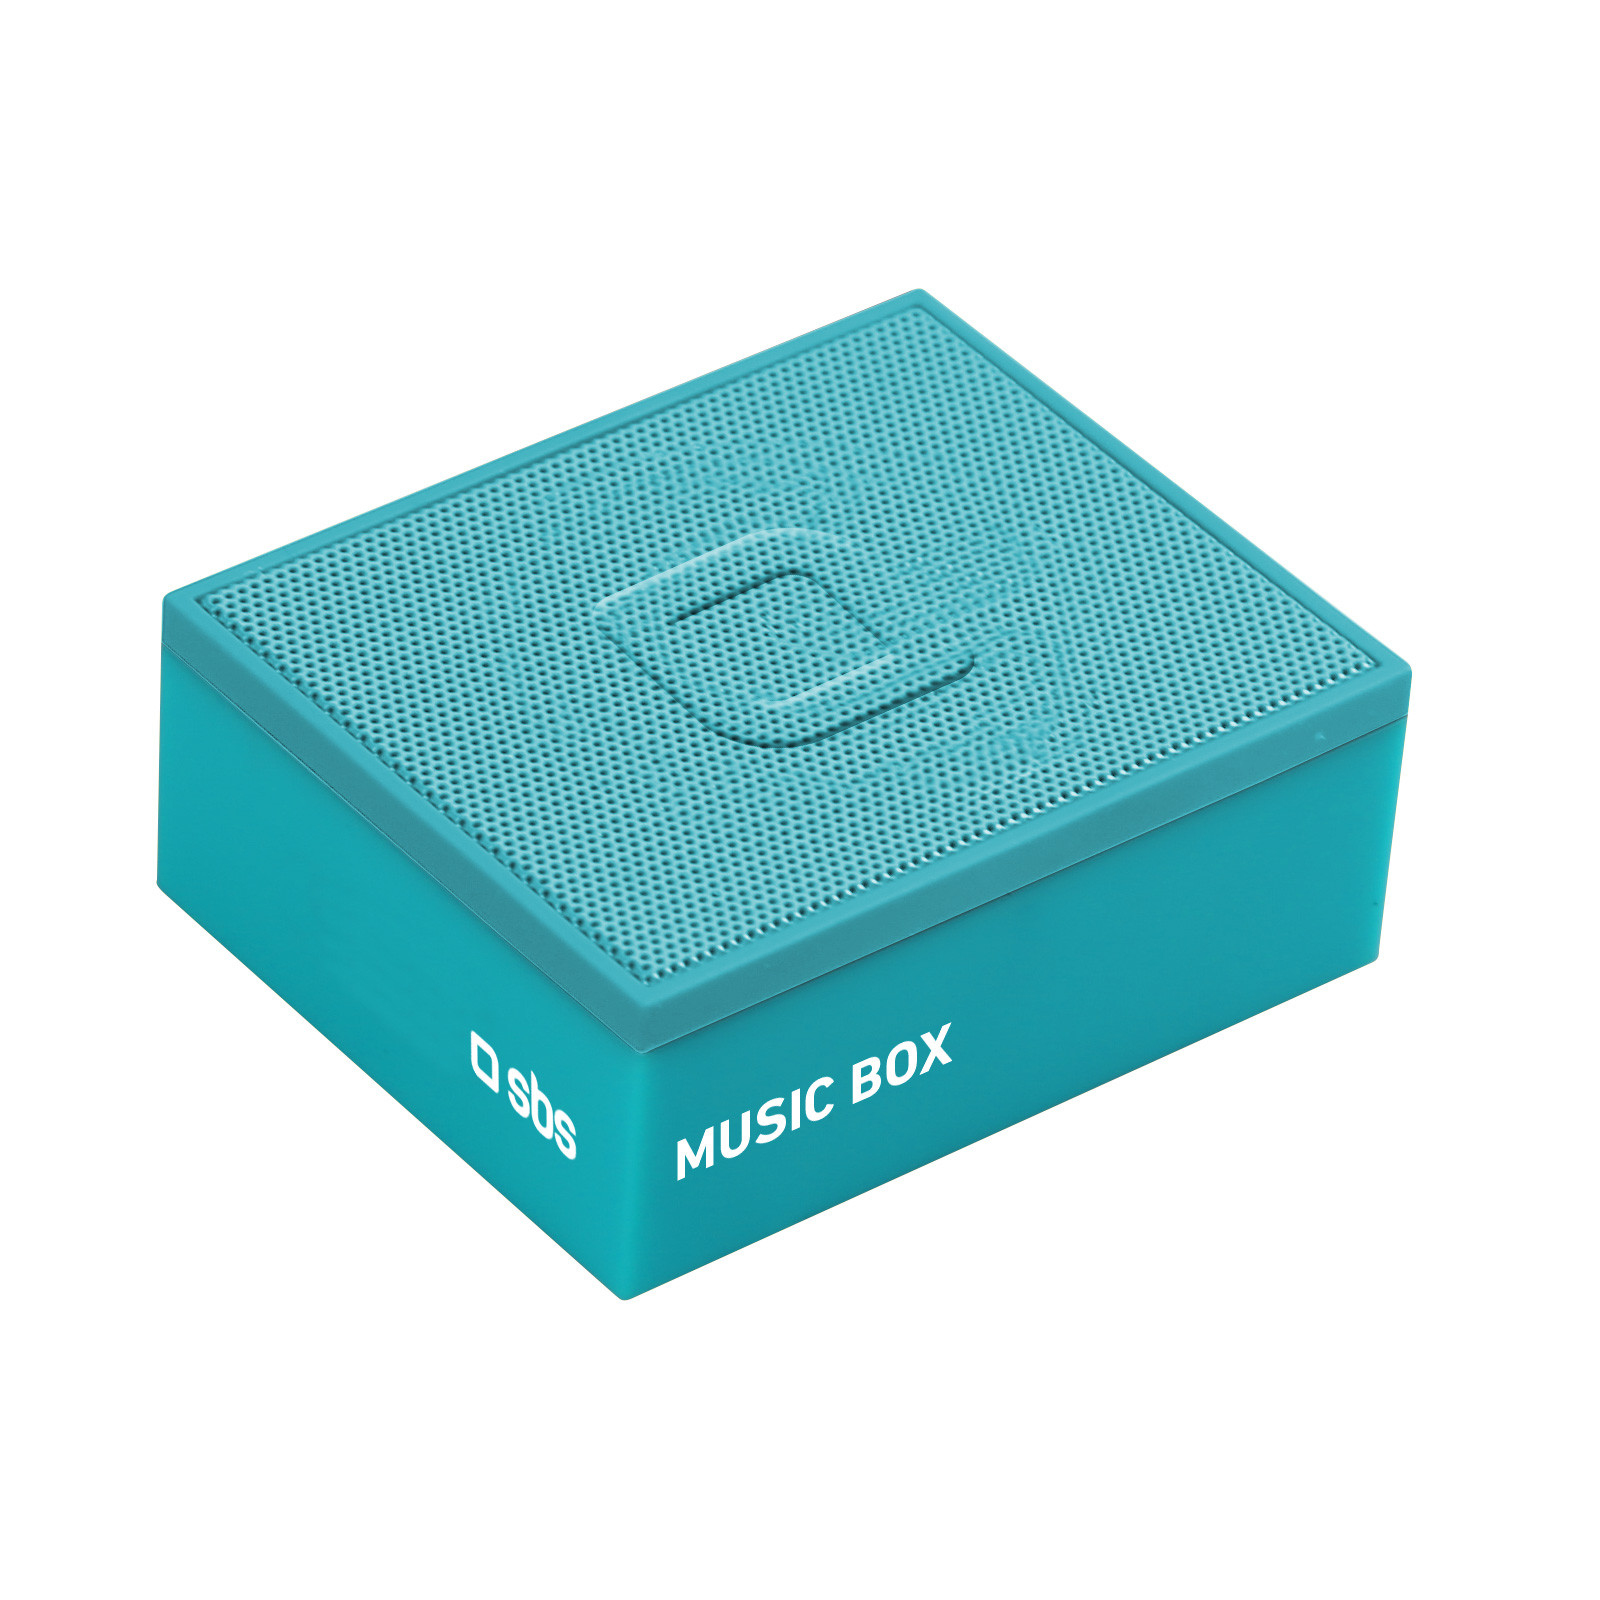 SBS Music Box